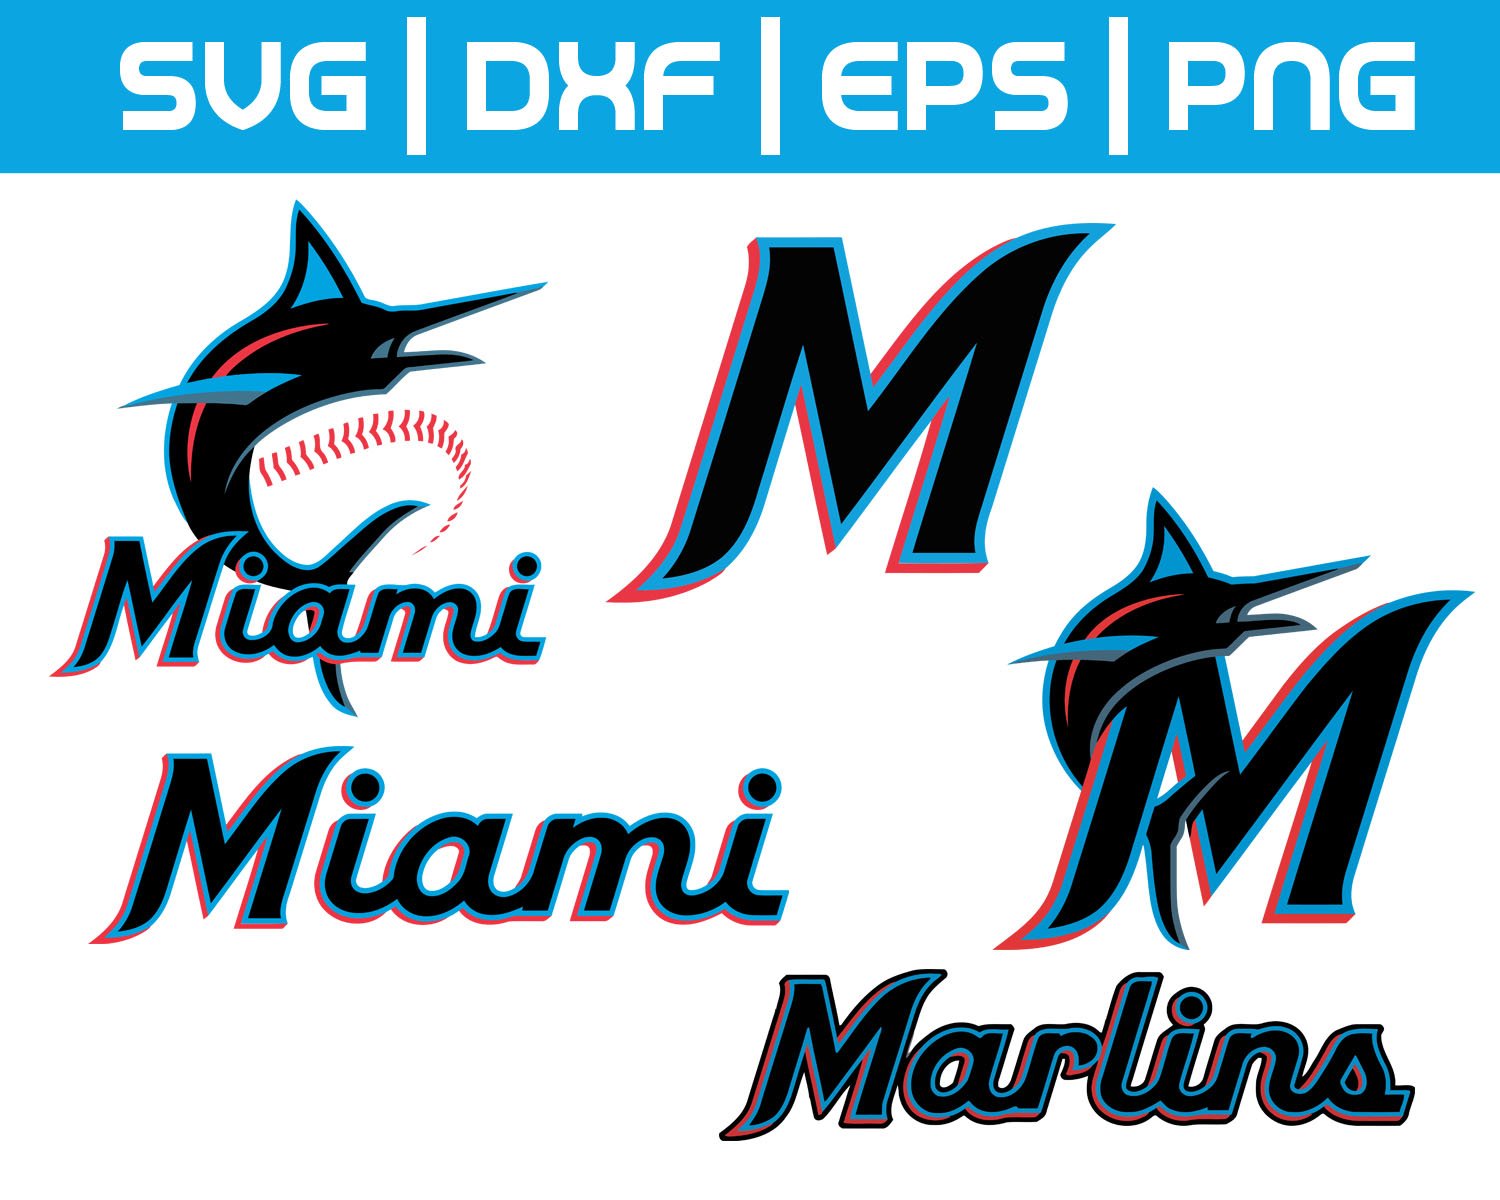 marlins baseball logo